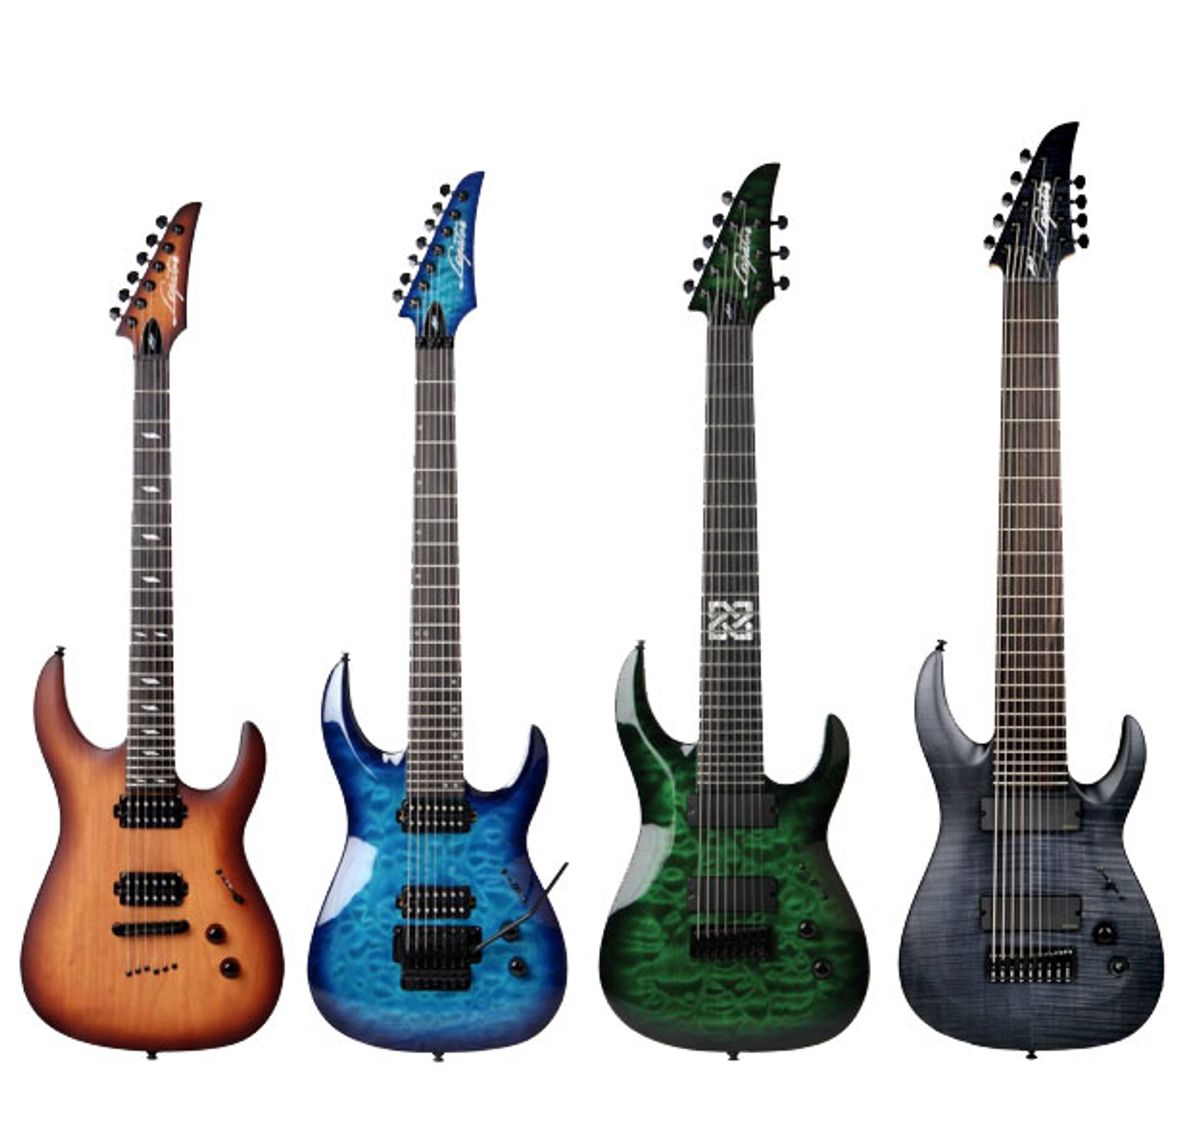 Legator Guitars Releases the Ninja Pro 300 Series